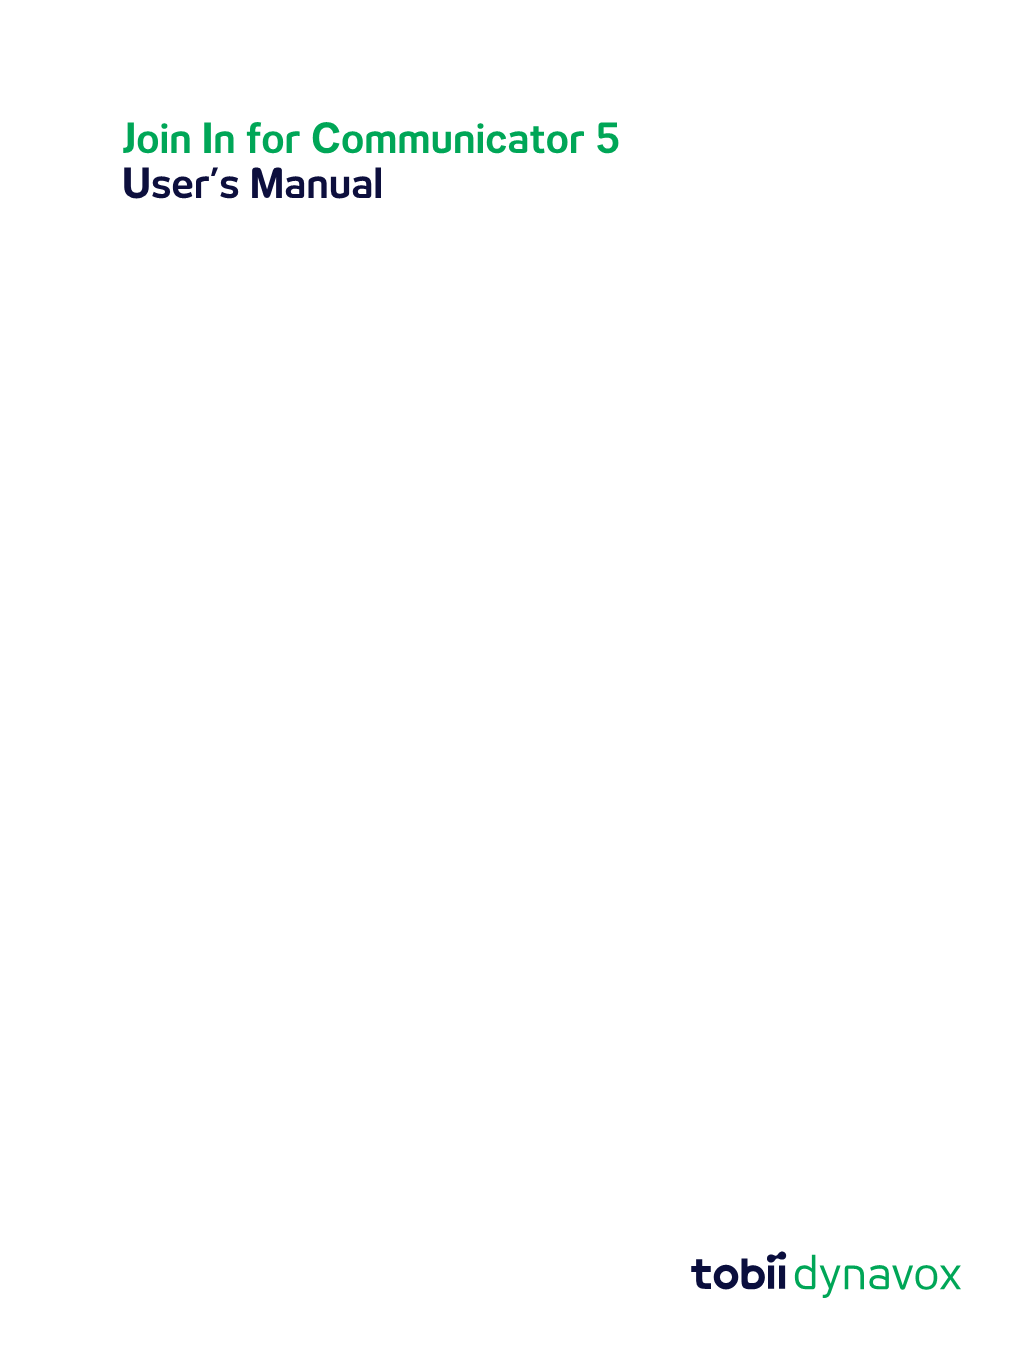 Join in for Communicator 5 User's Manual